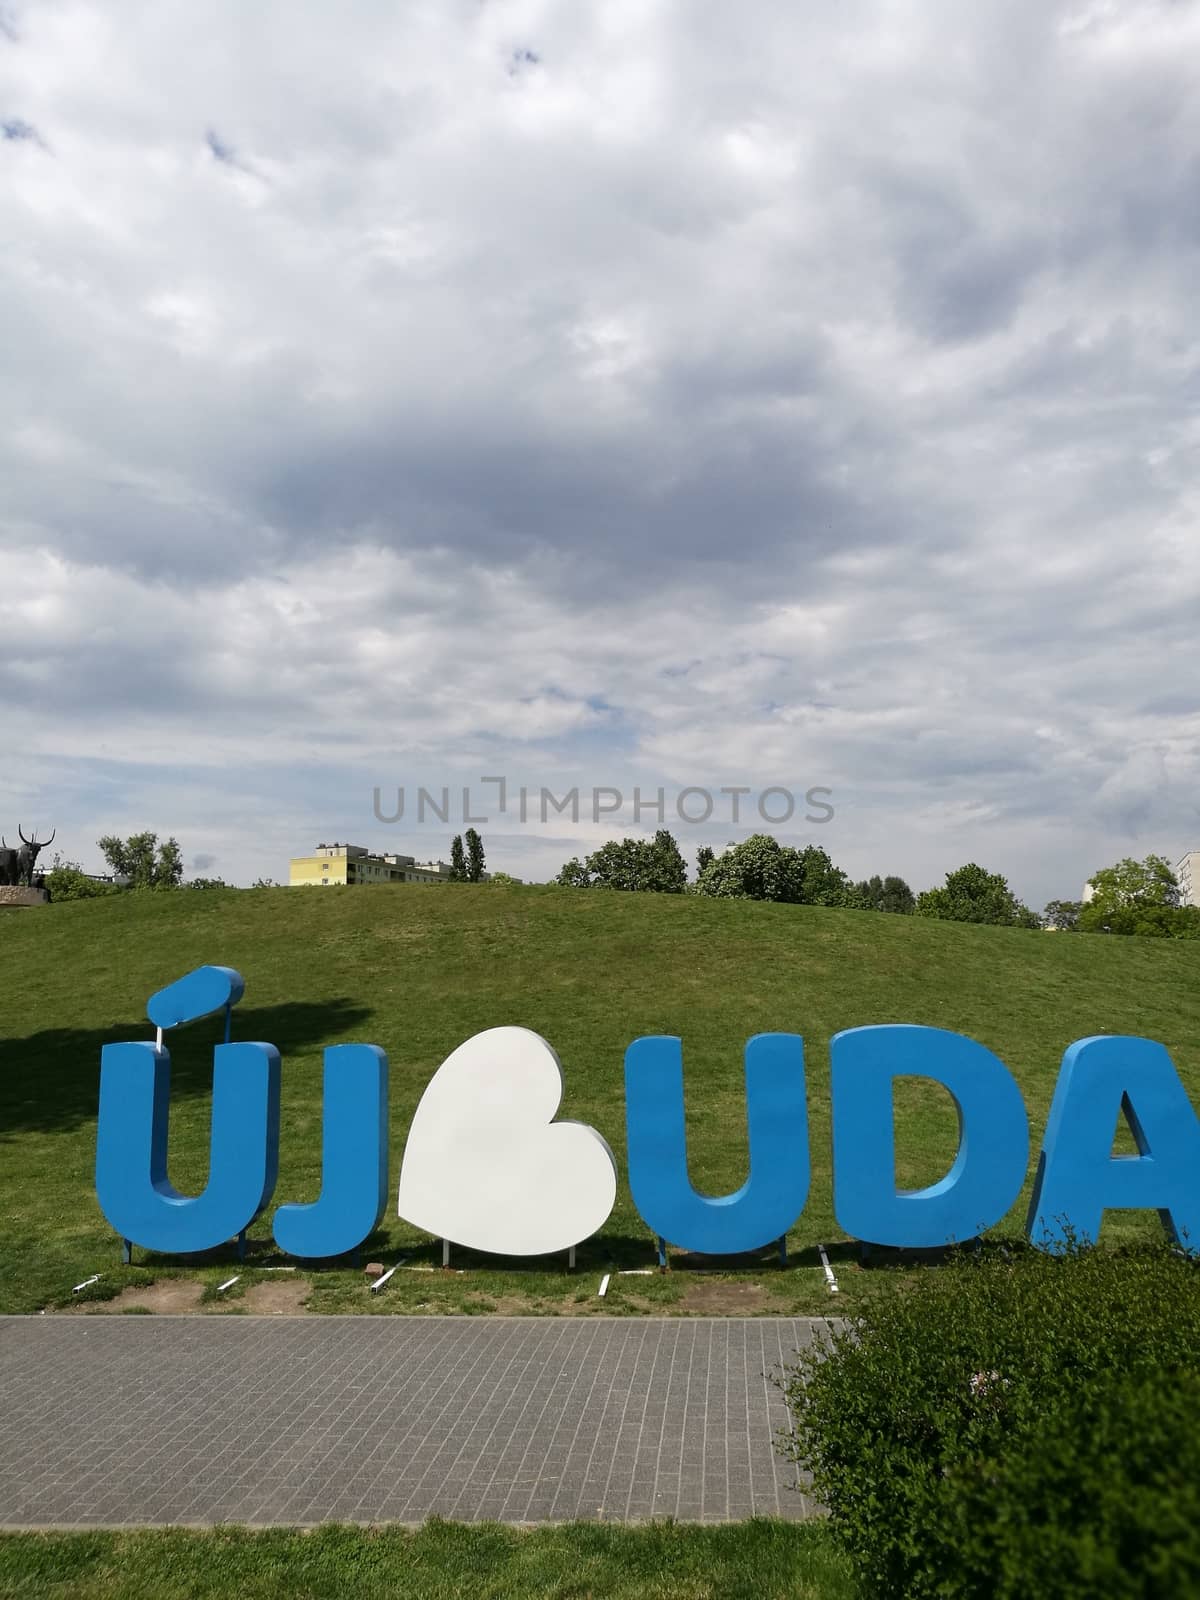 Újbuda inscription in the "Bikás" park. High quality photo